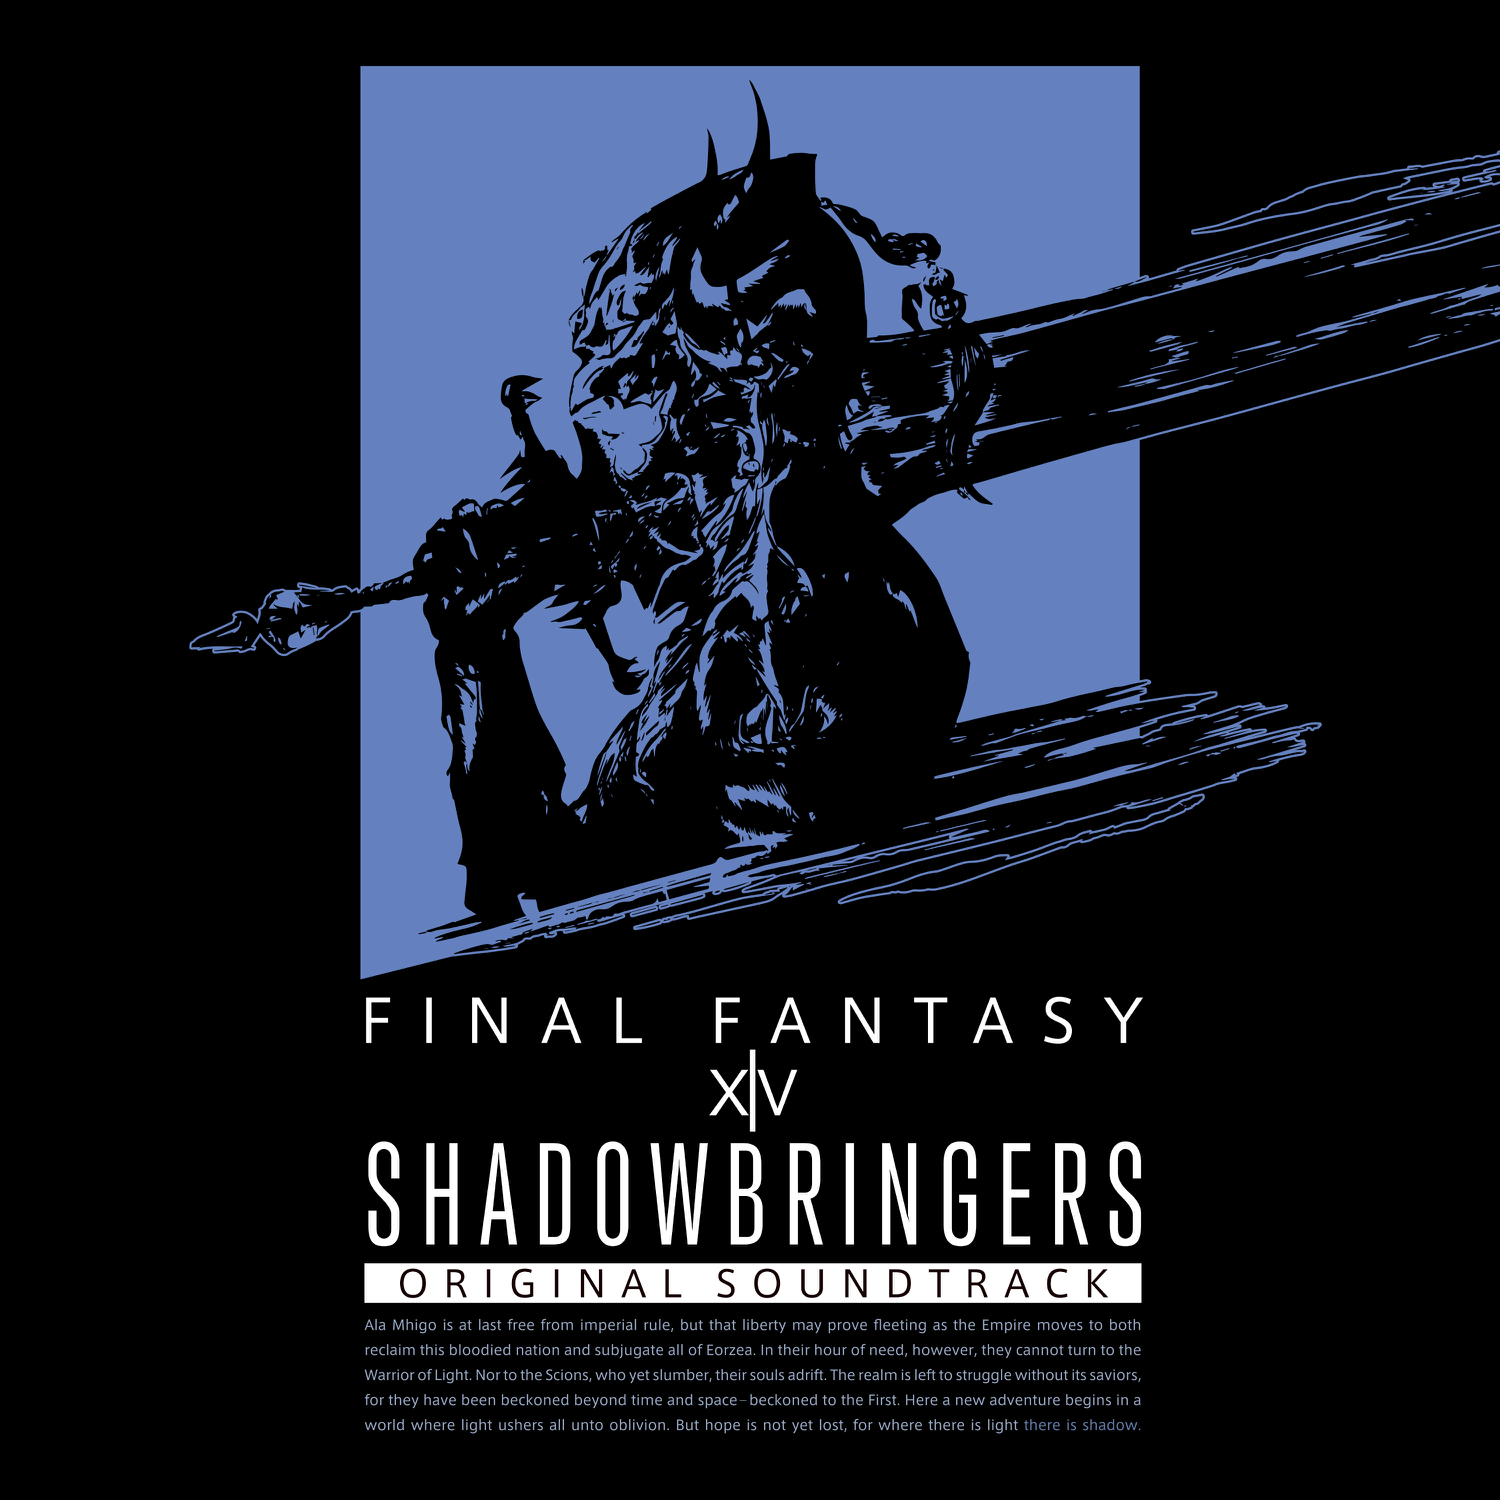 Shadowbringers Final Fantasy Xiv Original Soundtrack Wiki Final Fantasy Fandom